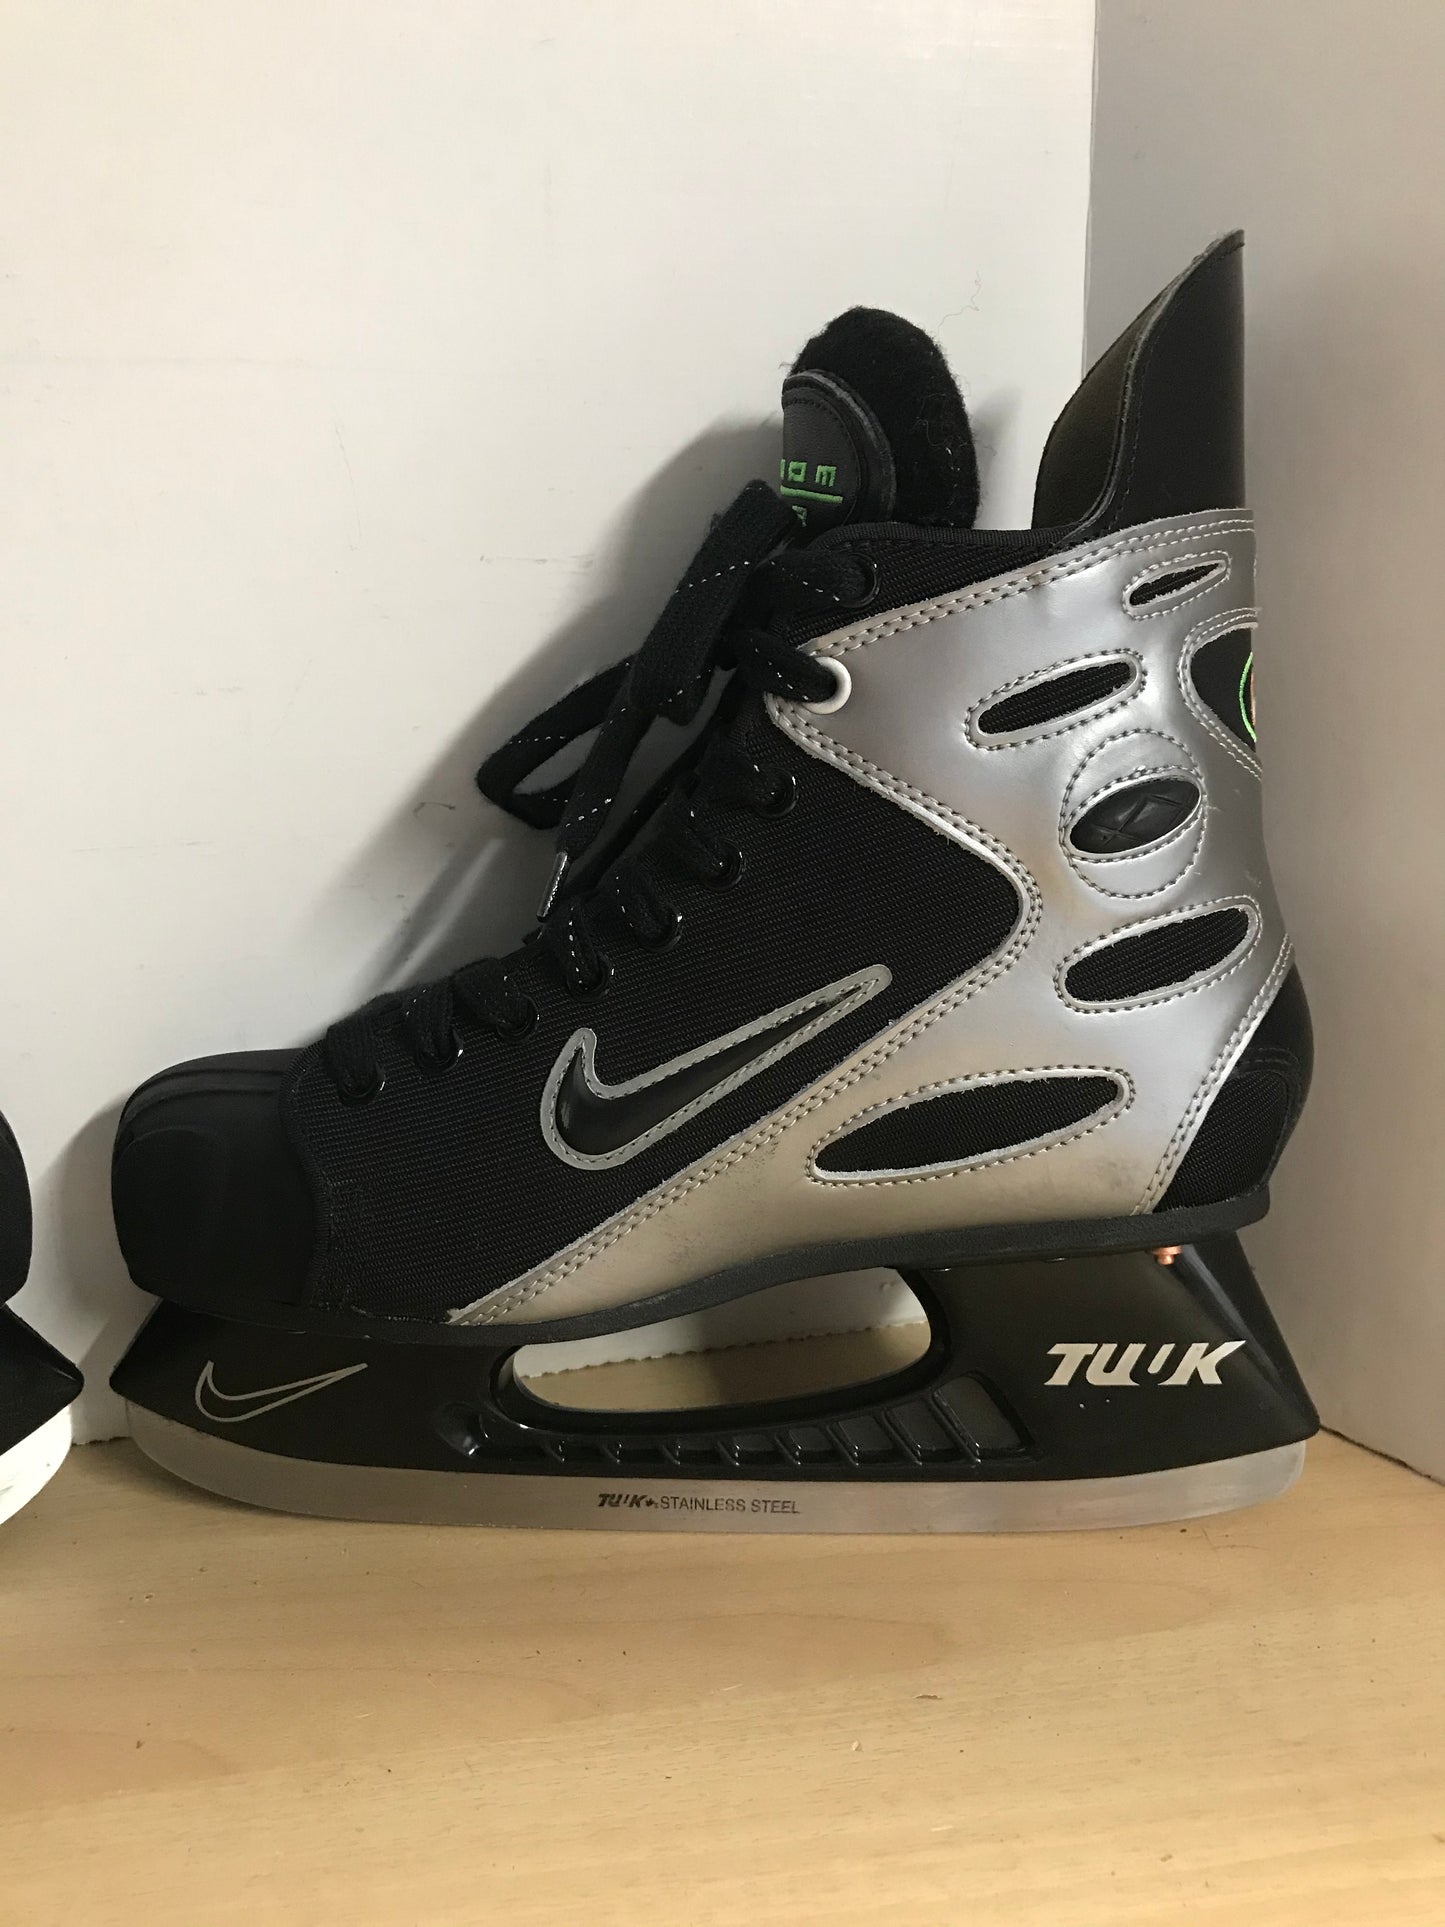 Hockey Skates Men's Size 9 Shoe Size Nike Zoom Air As New BD 6084